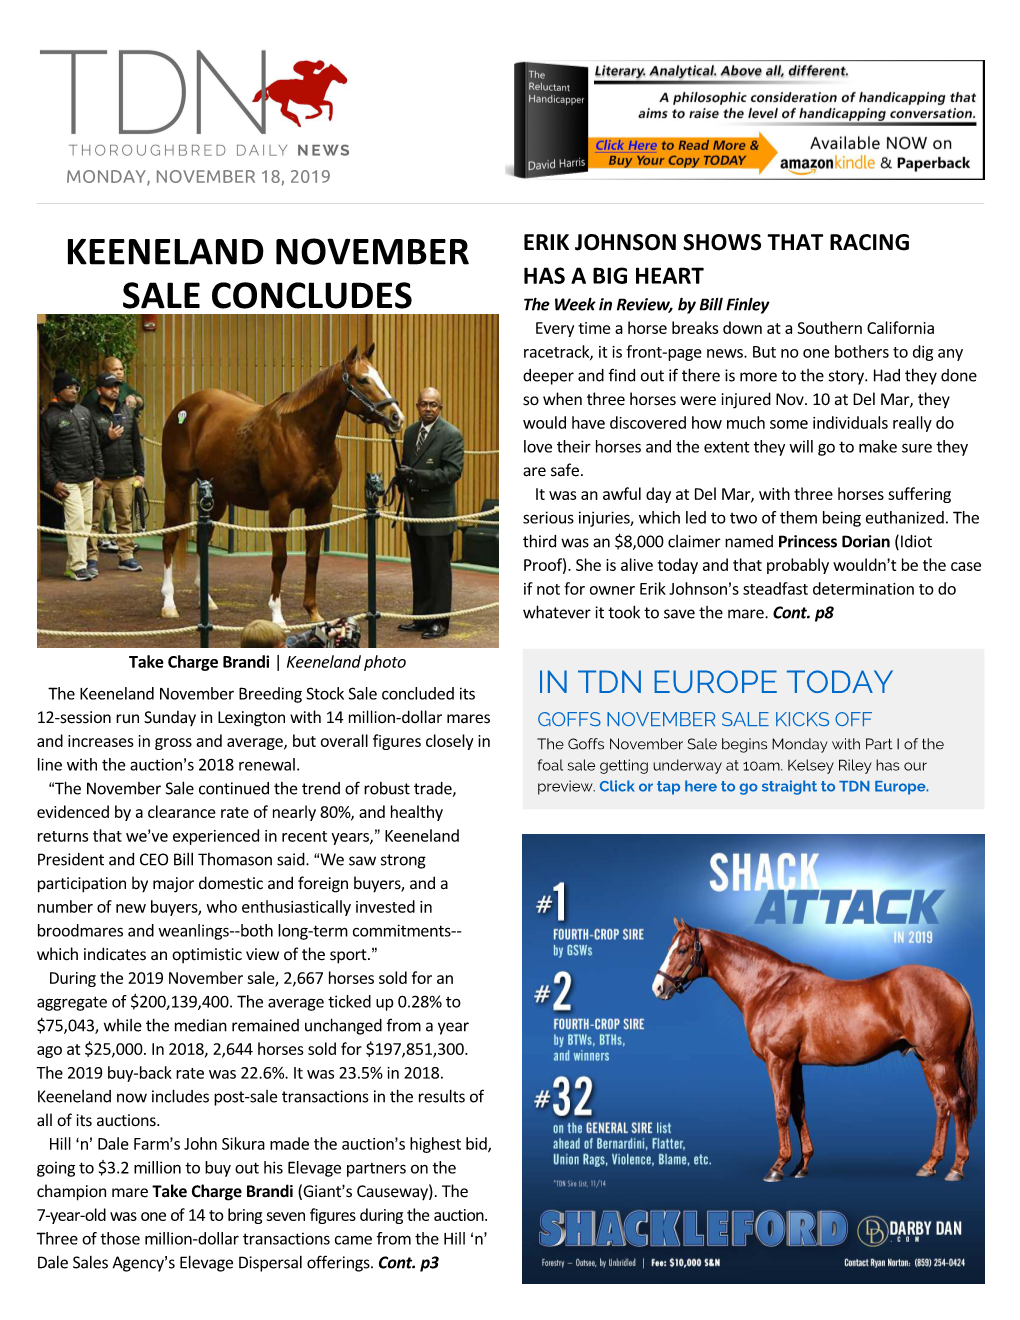 Keeneland November Sale Concludes